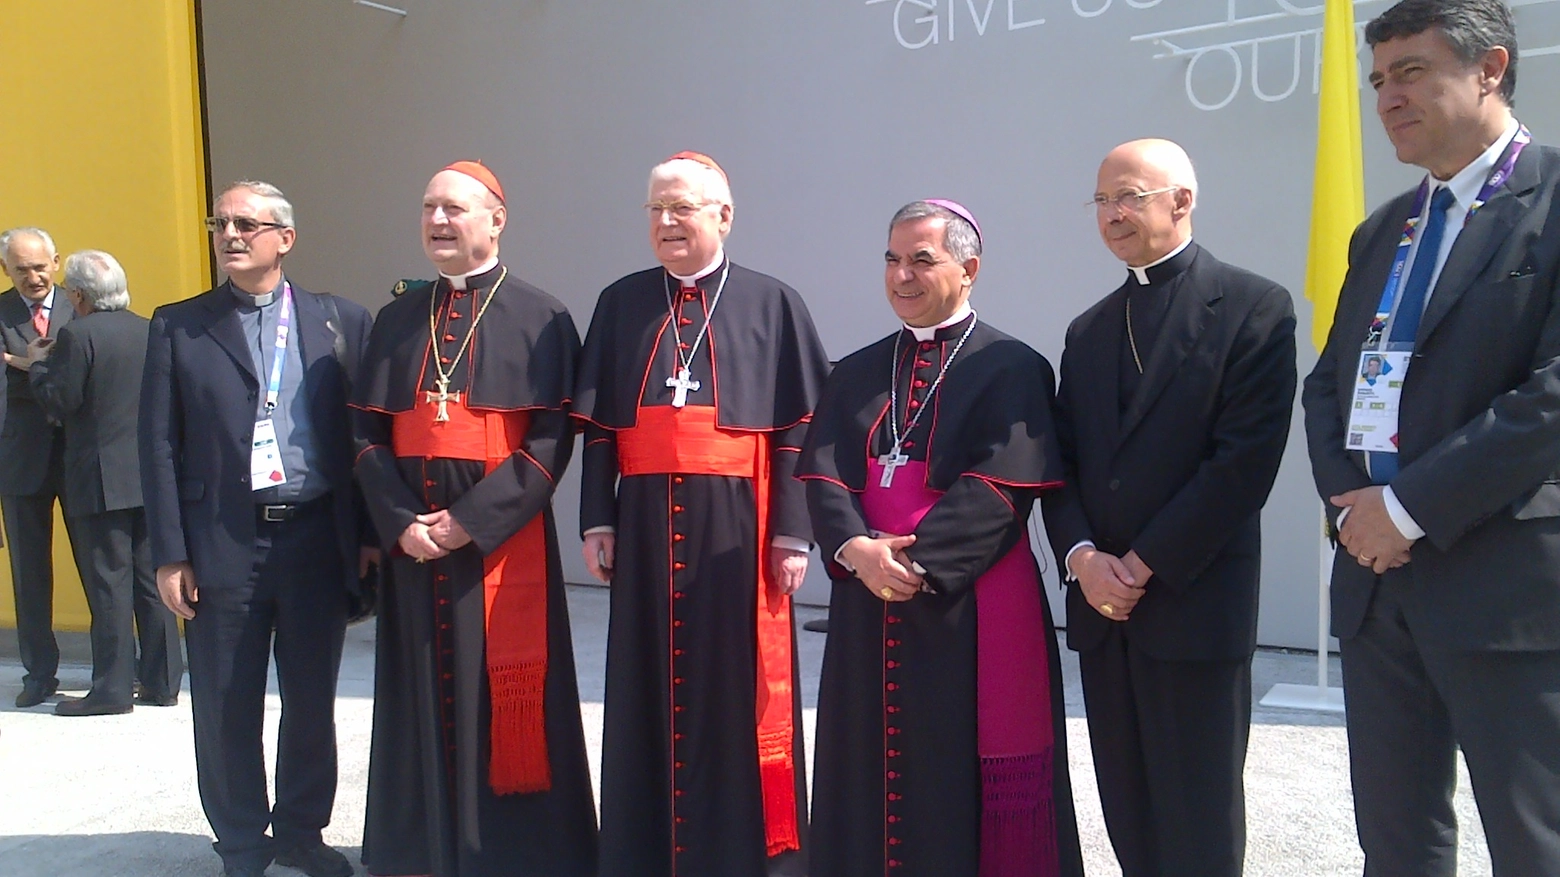 La visita dei cardinali al padiglione della Santa Sede